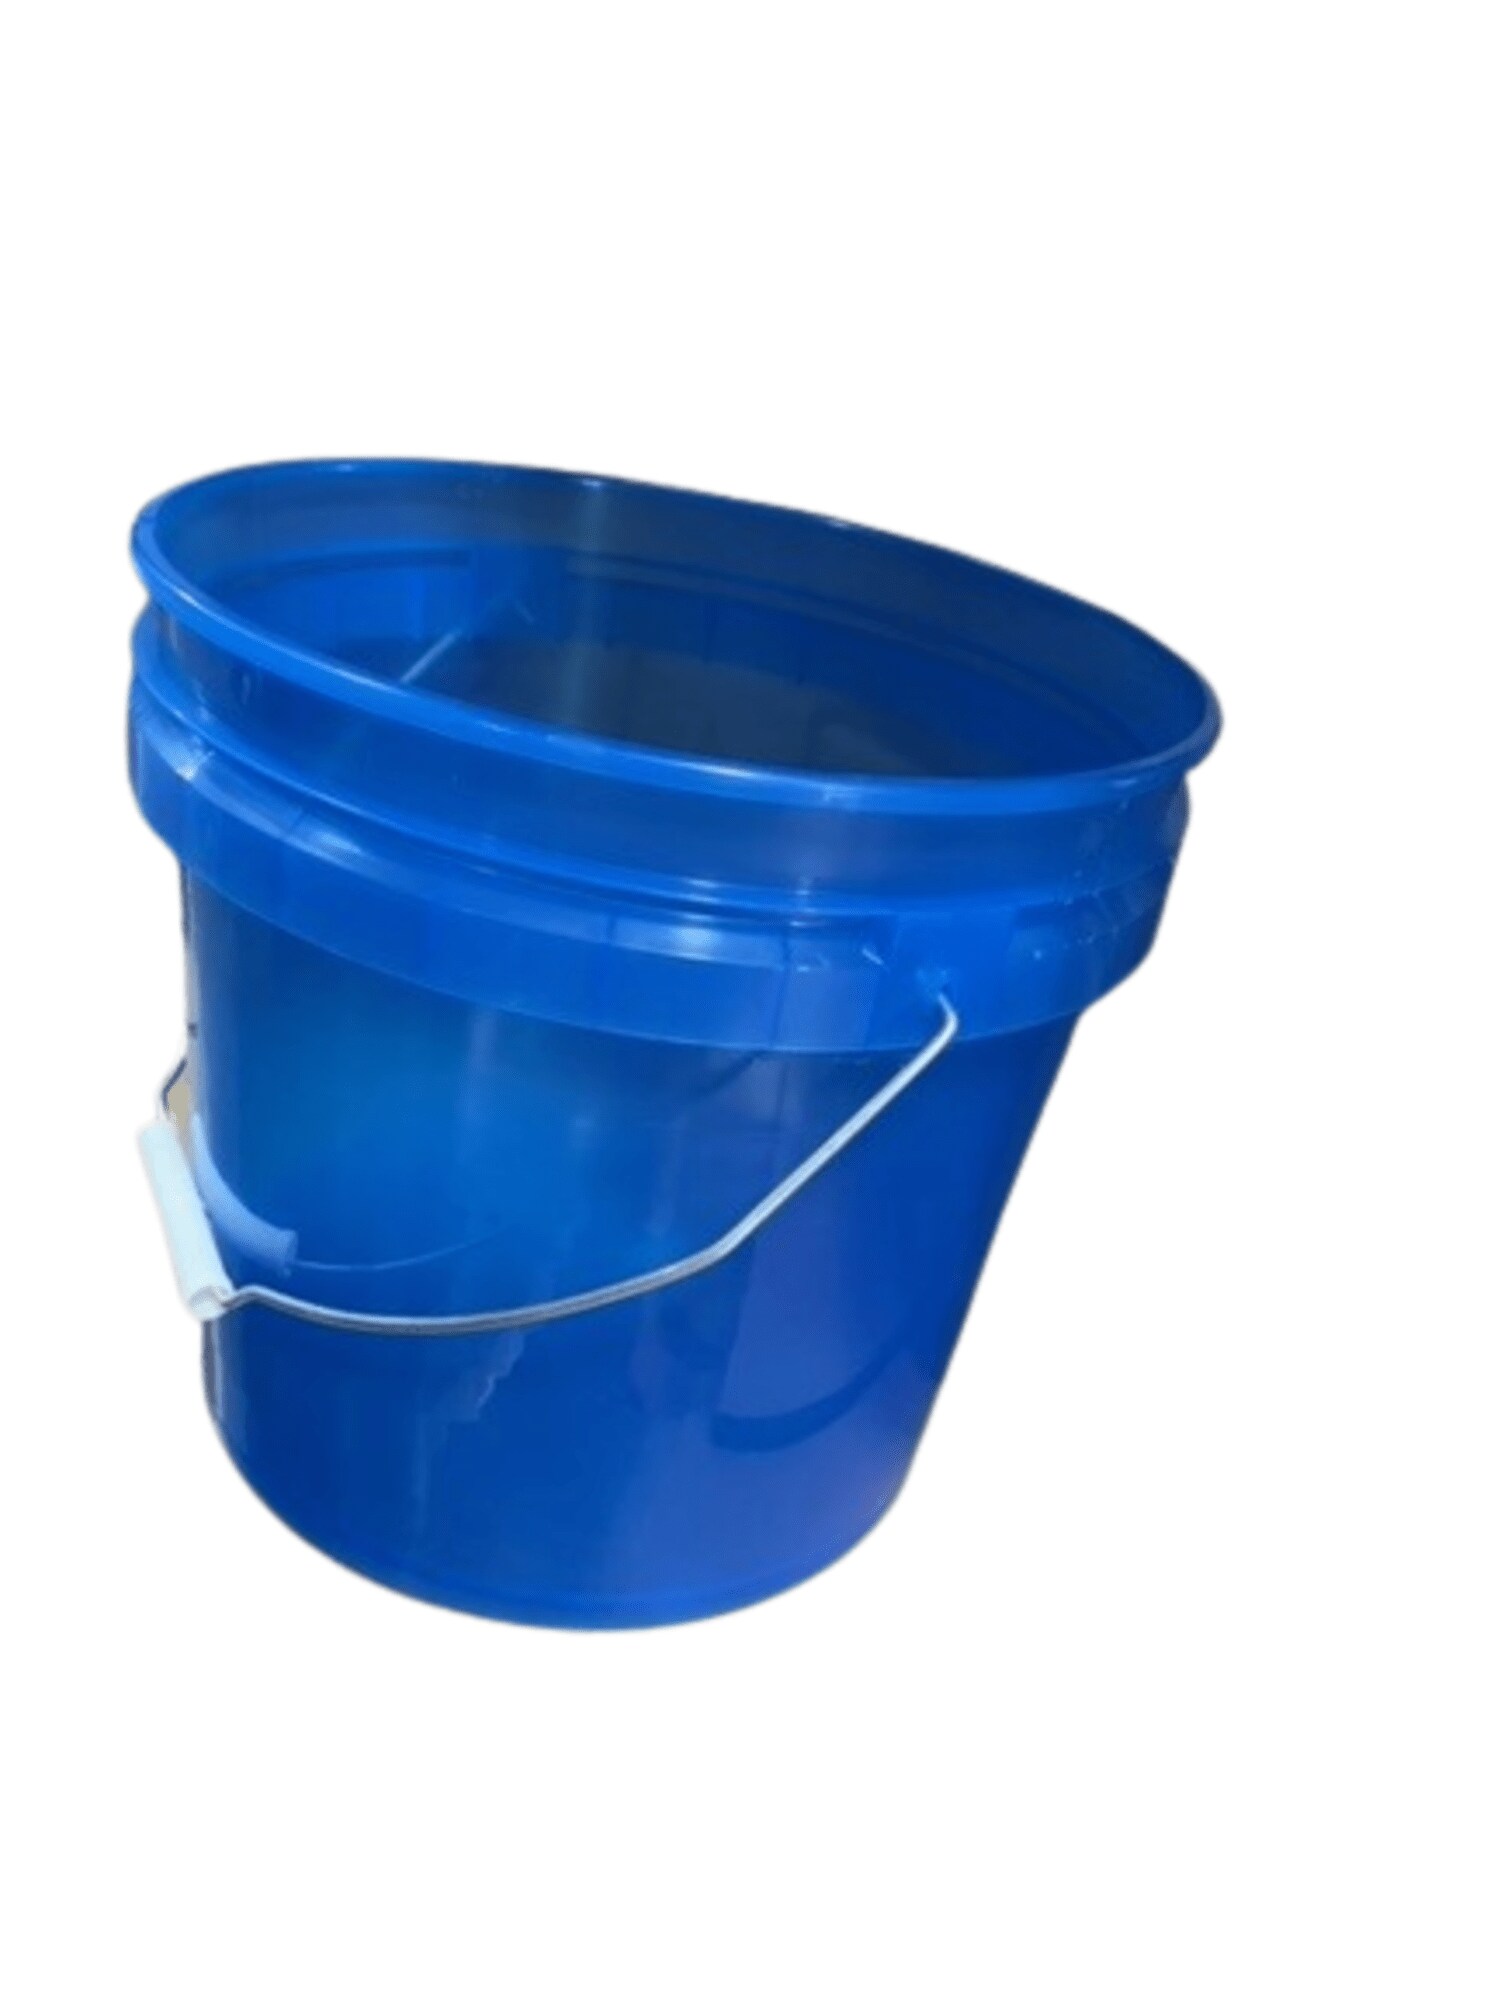 Car Wash Bucket Kit, 3.5G Bucket, Complete Car Washing Kit